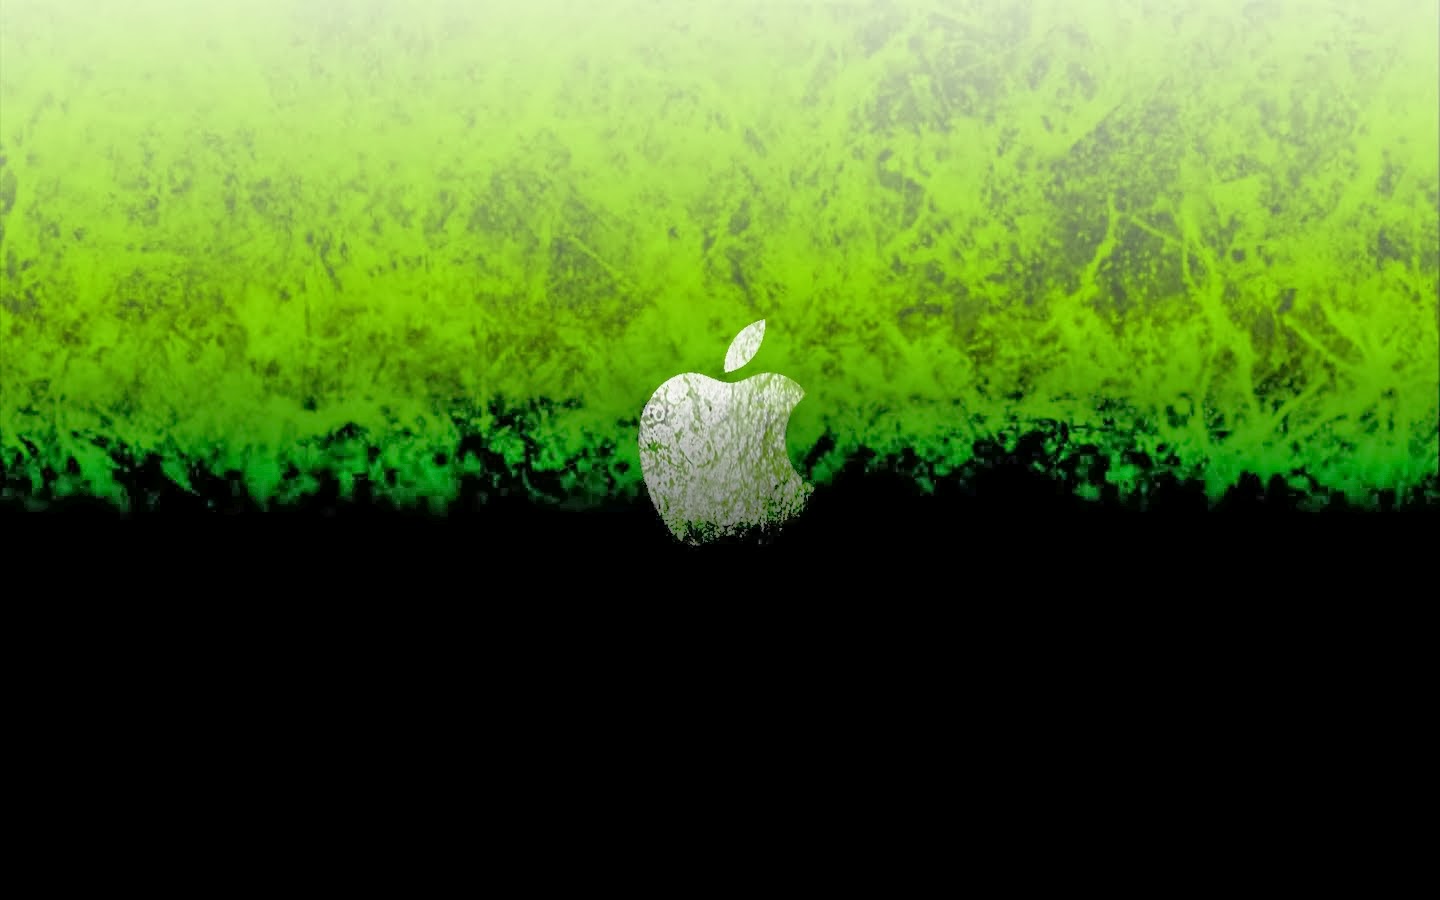 Apple Green Wallpaper